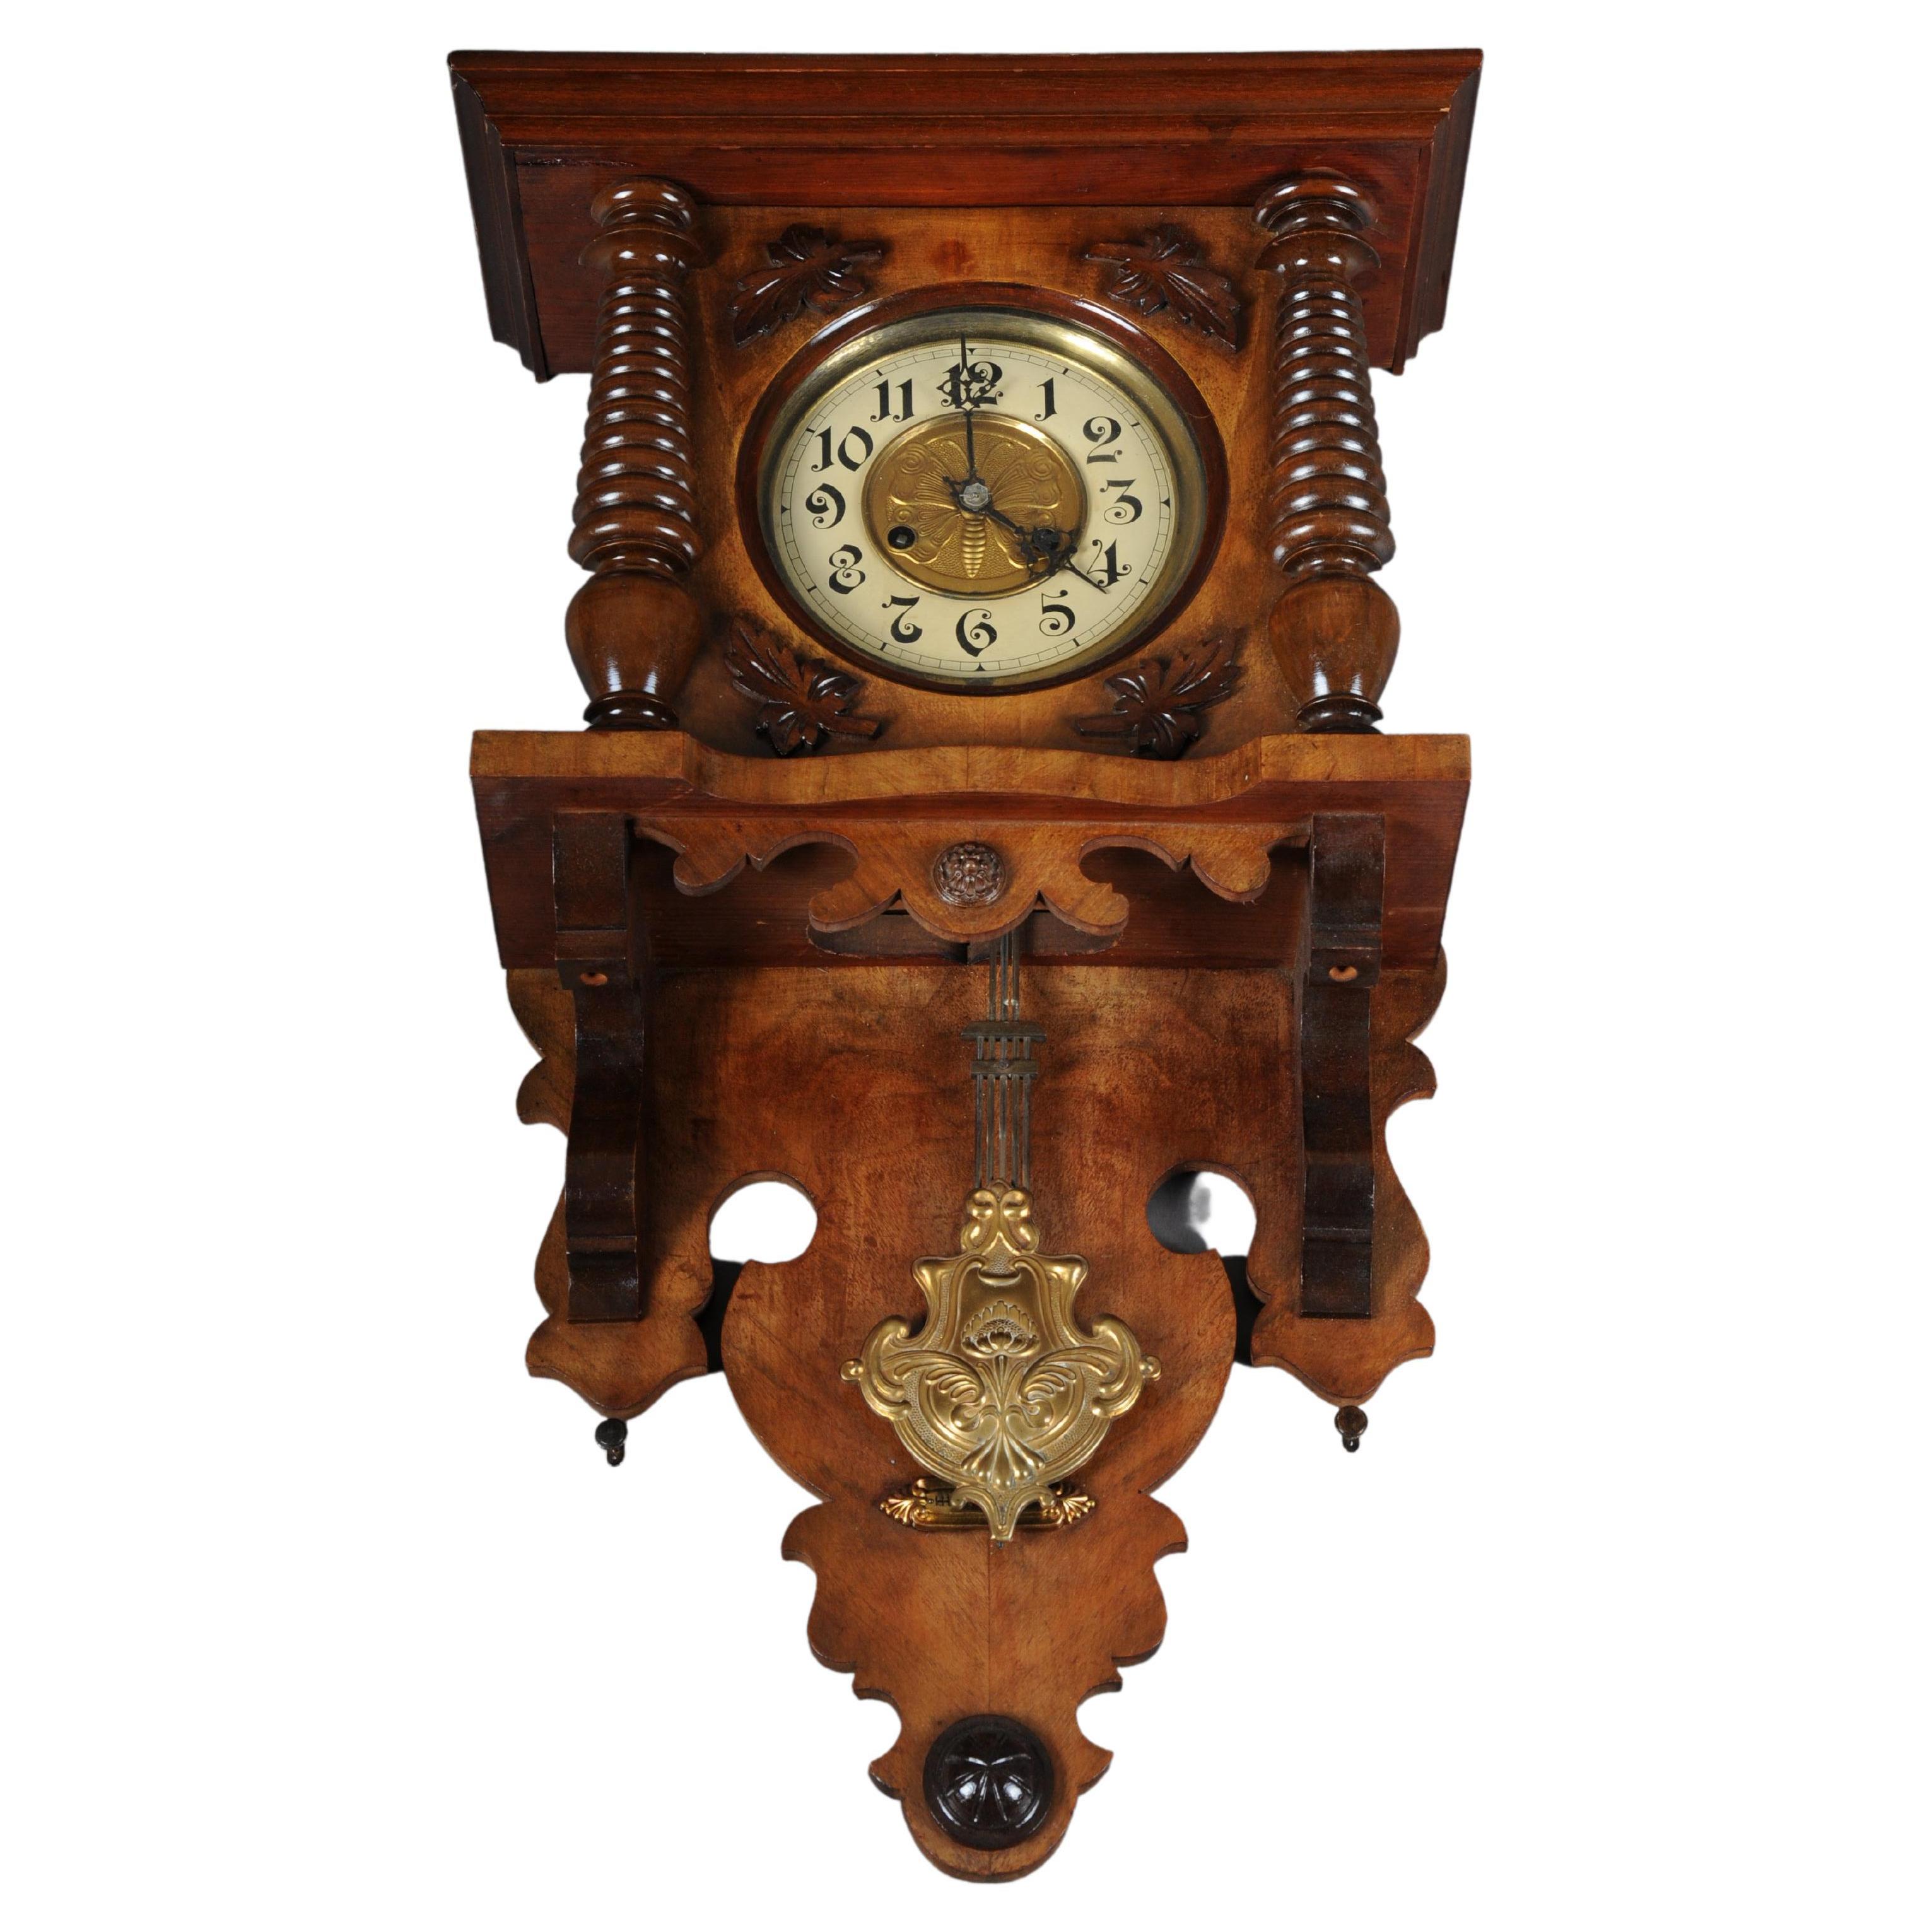 Antique found time wall clock/regulator from around 1880